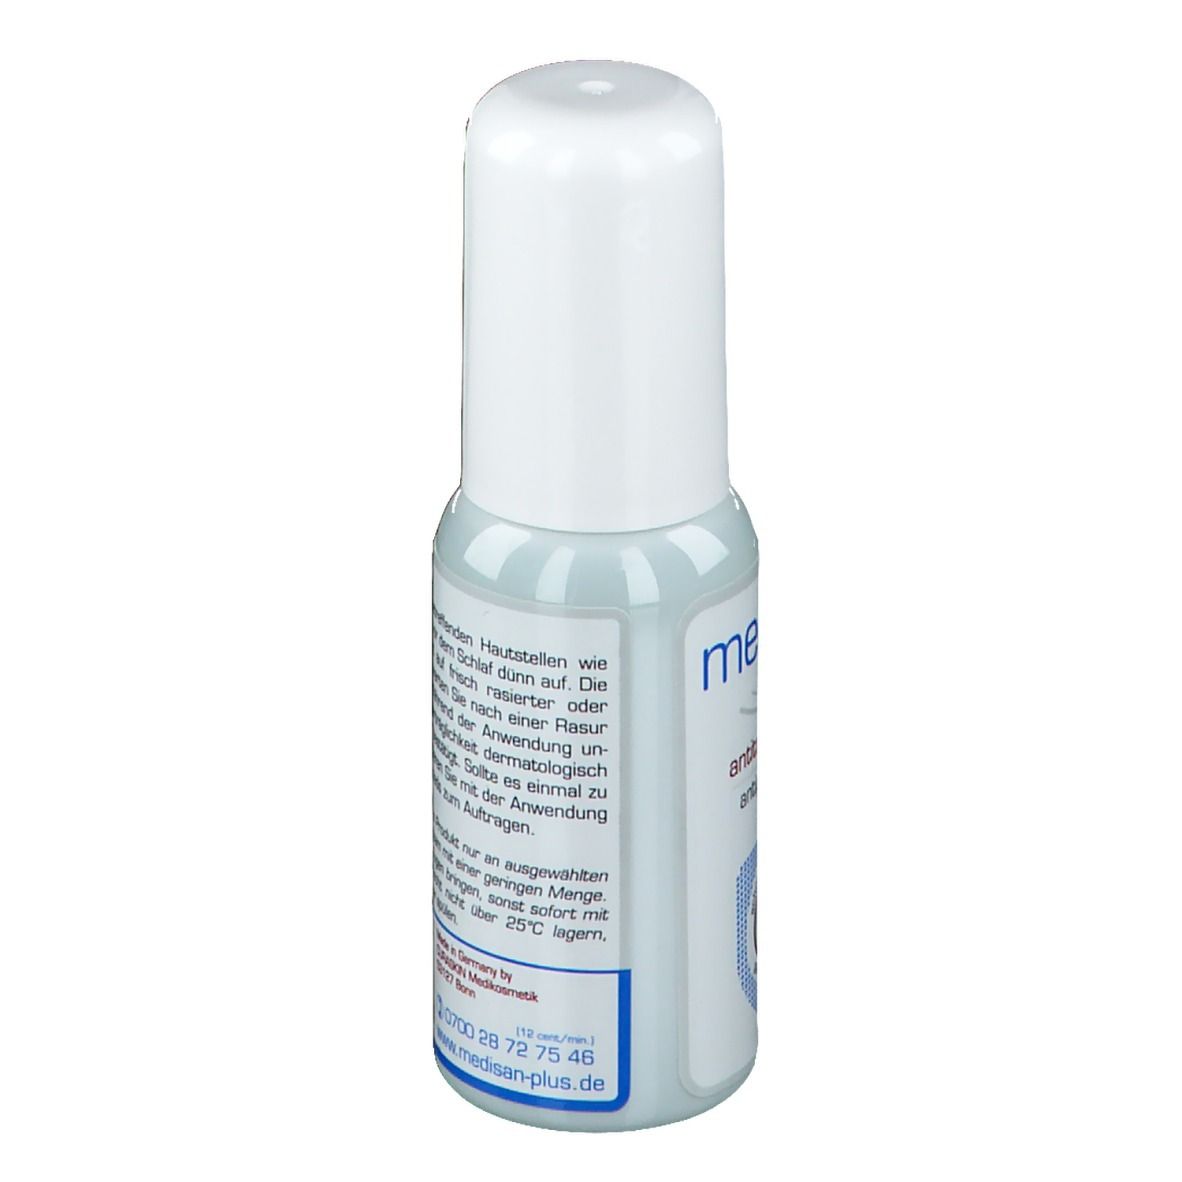 Medisan® Plus Antitranspirant Pumpspray